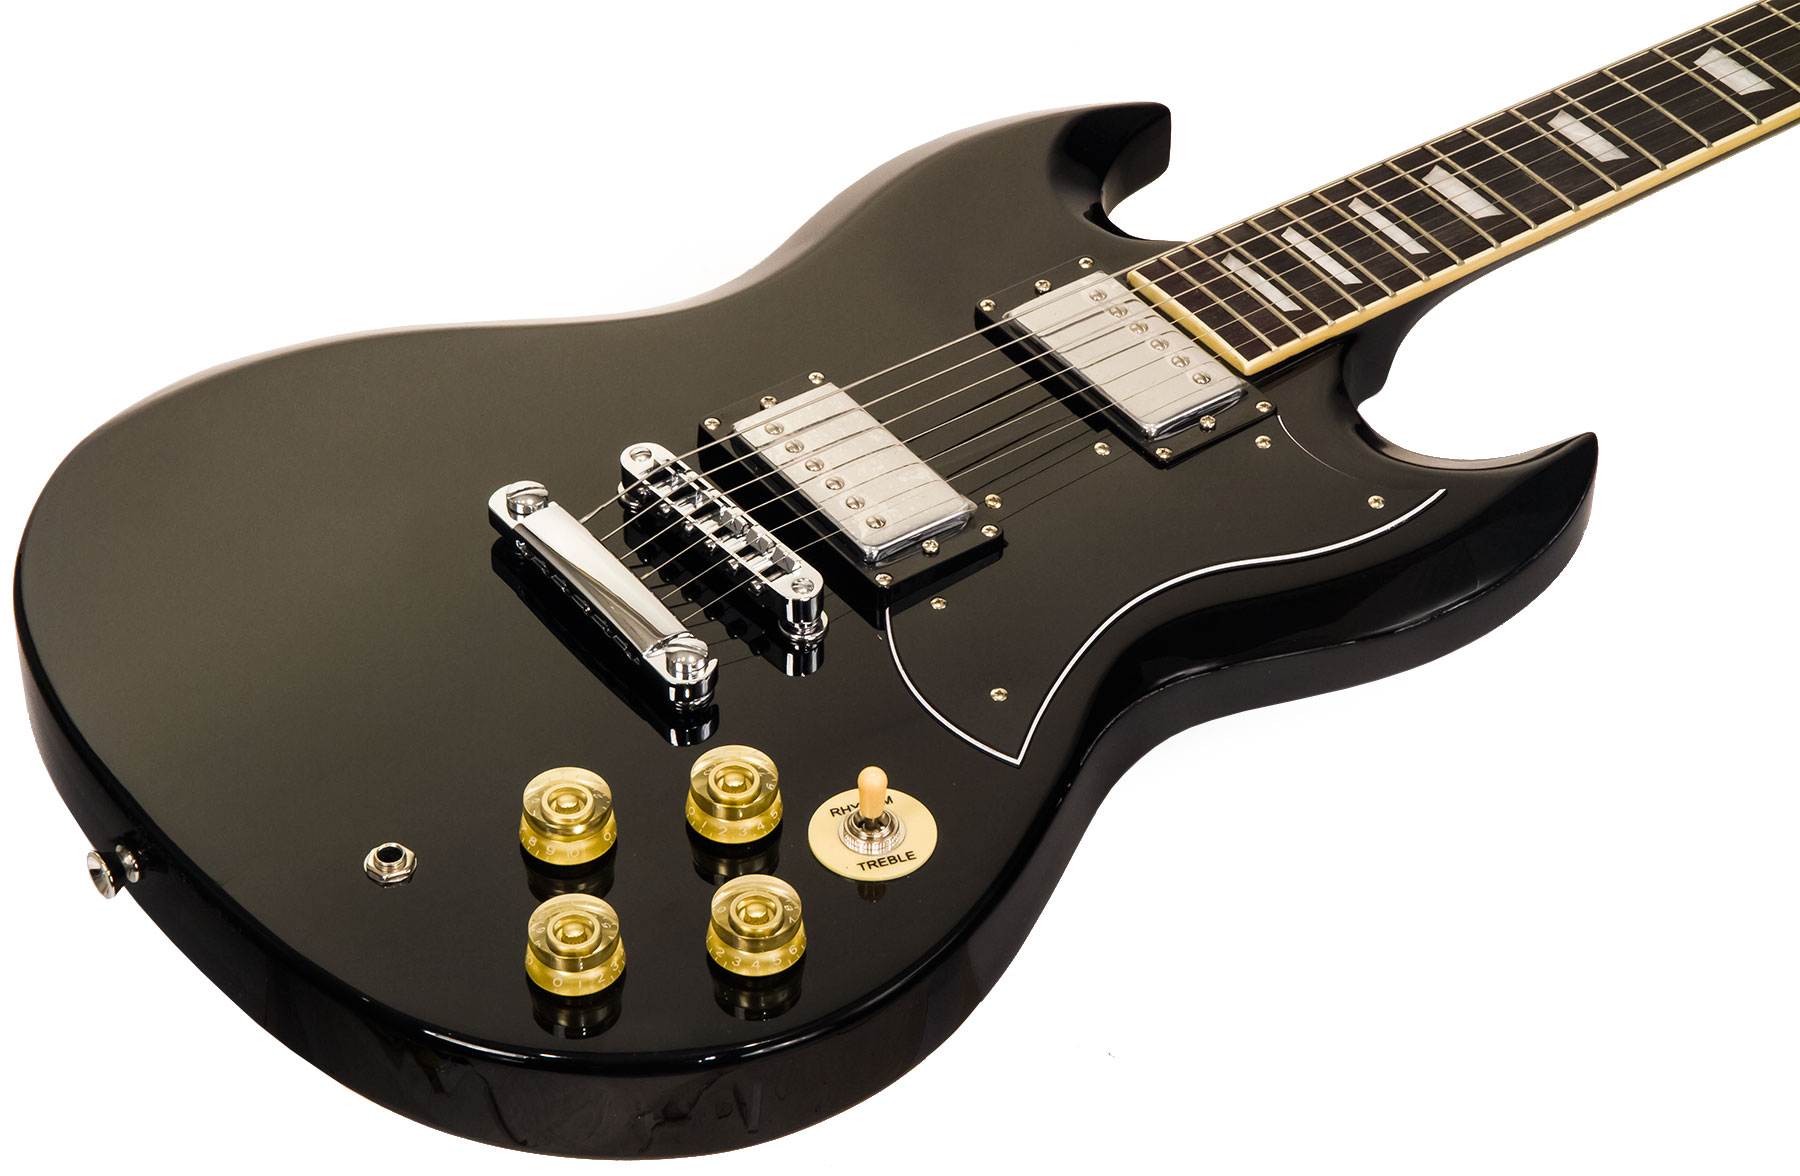 Eastone Sdc70 +marshall Mg10g Gold +cable +housse +courroie +mediators - Black - E-Gitarre Set - Variation 2